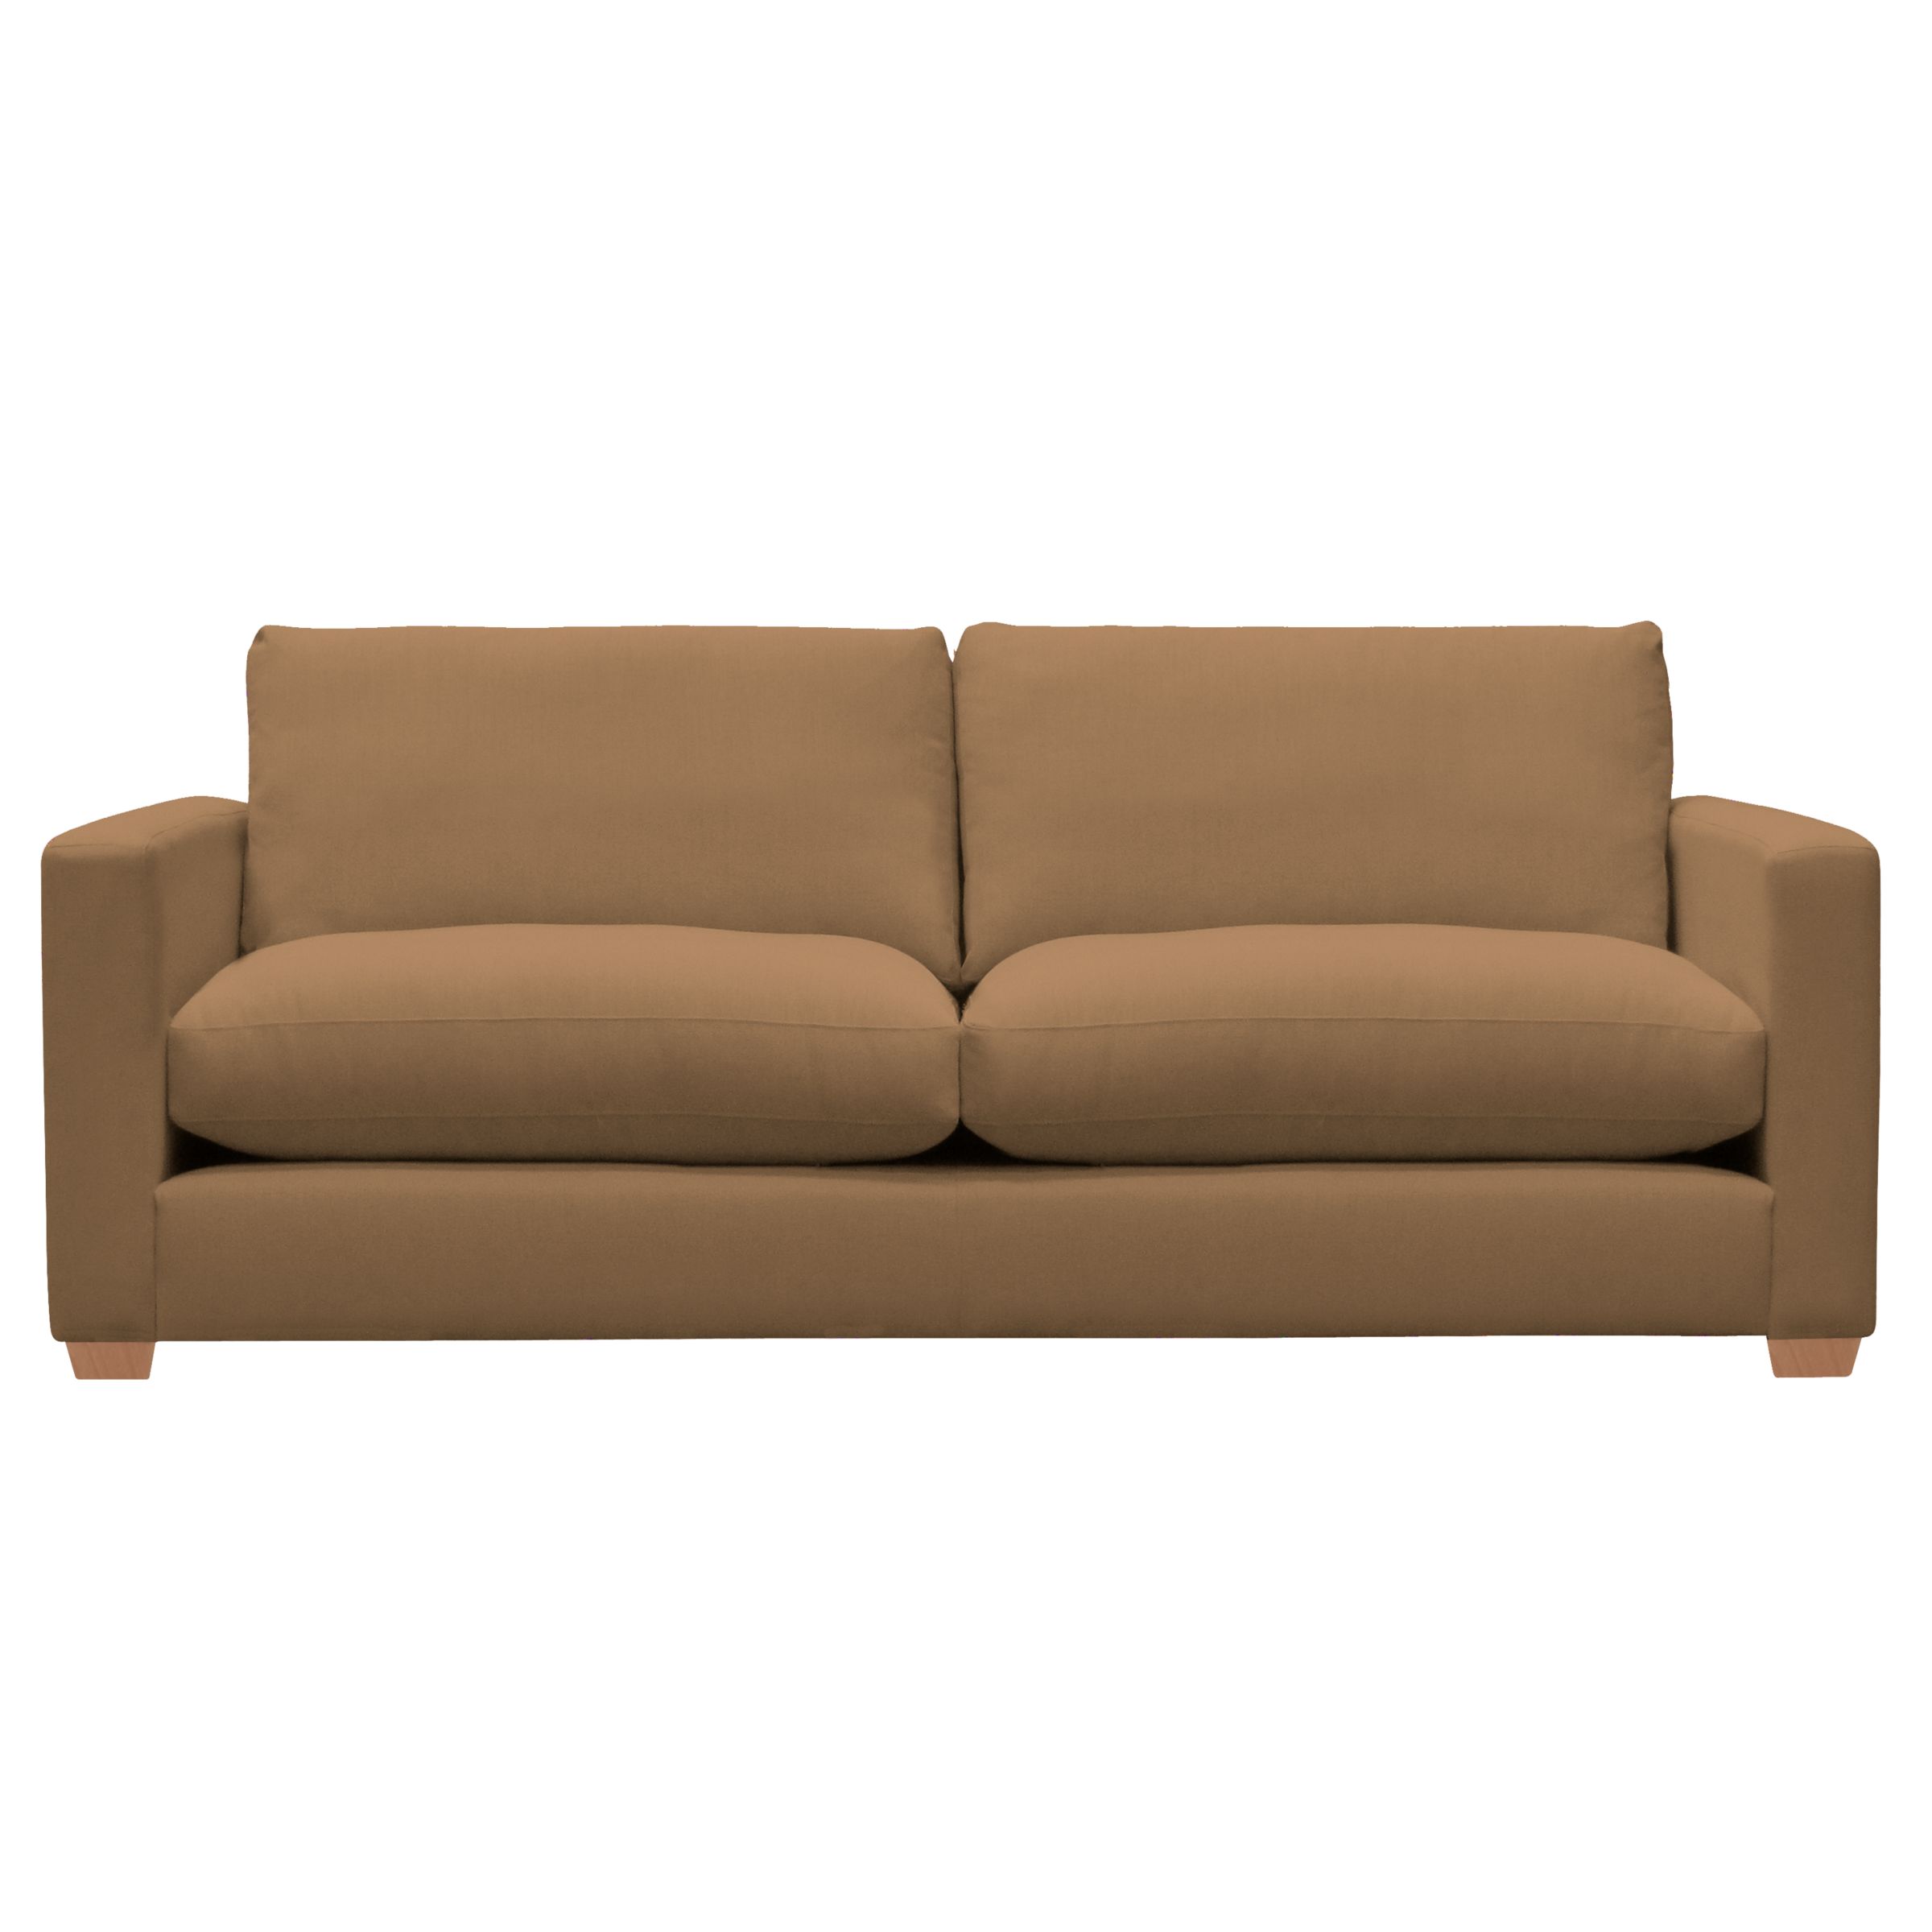 John Lewis Options Slim Arm Grand Sofa, Linley Mushroom, width 212cm